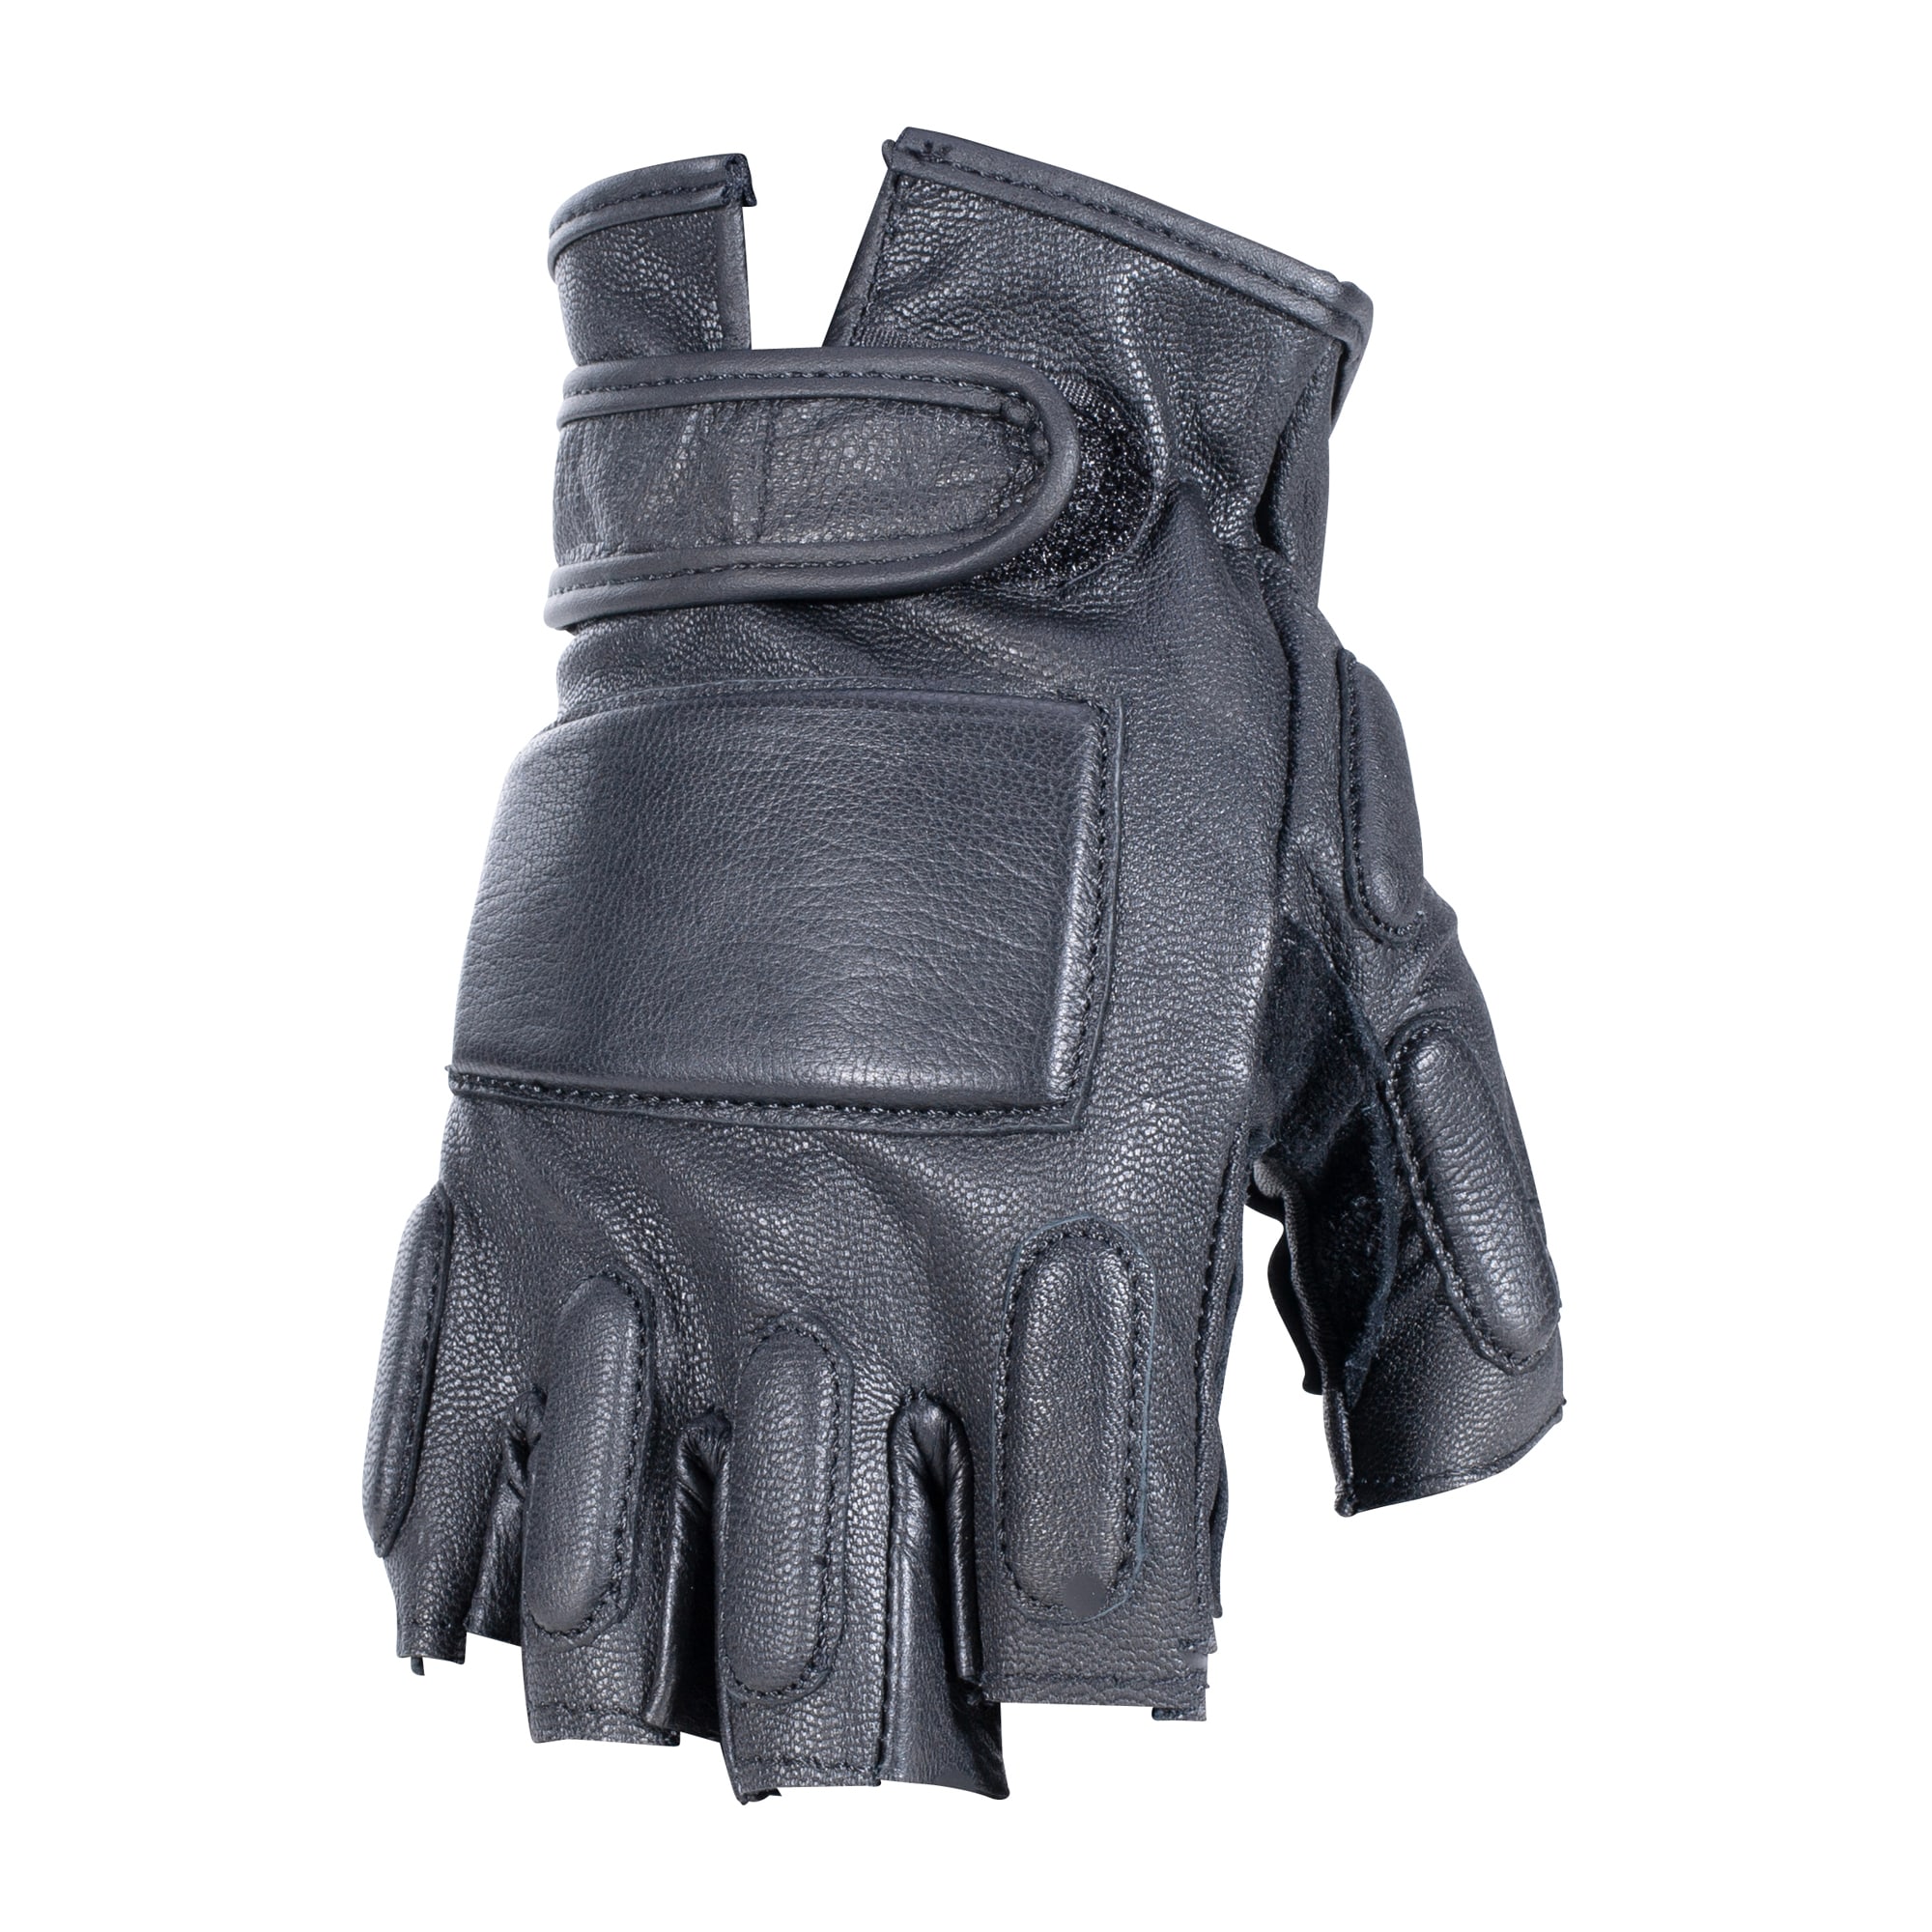 Tactical Fingerless Gloves